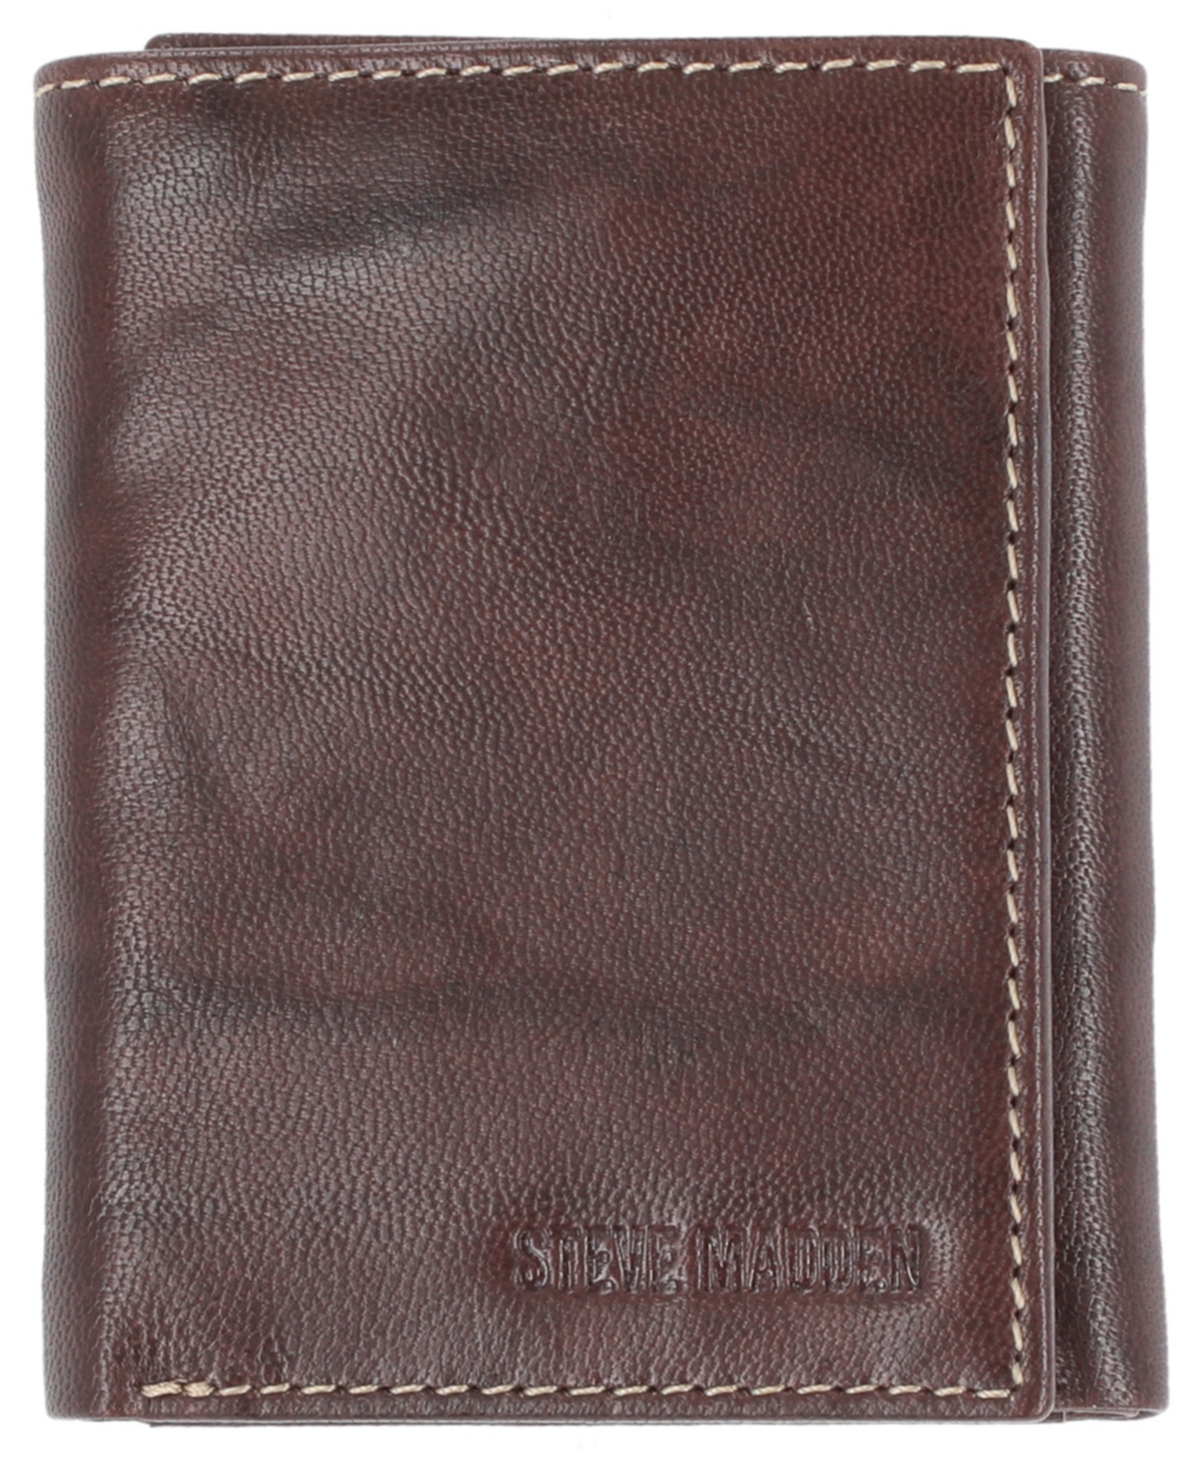 Steve Madden Men's Antique-like Trifold Wallet In Brown